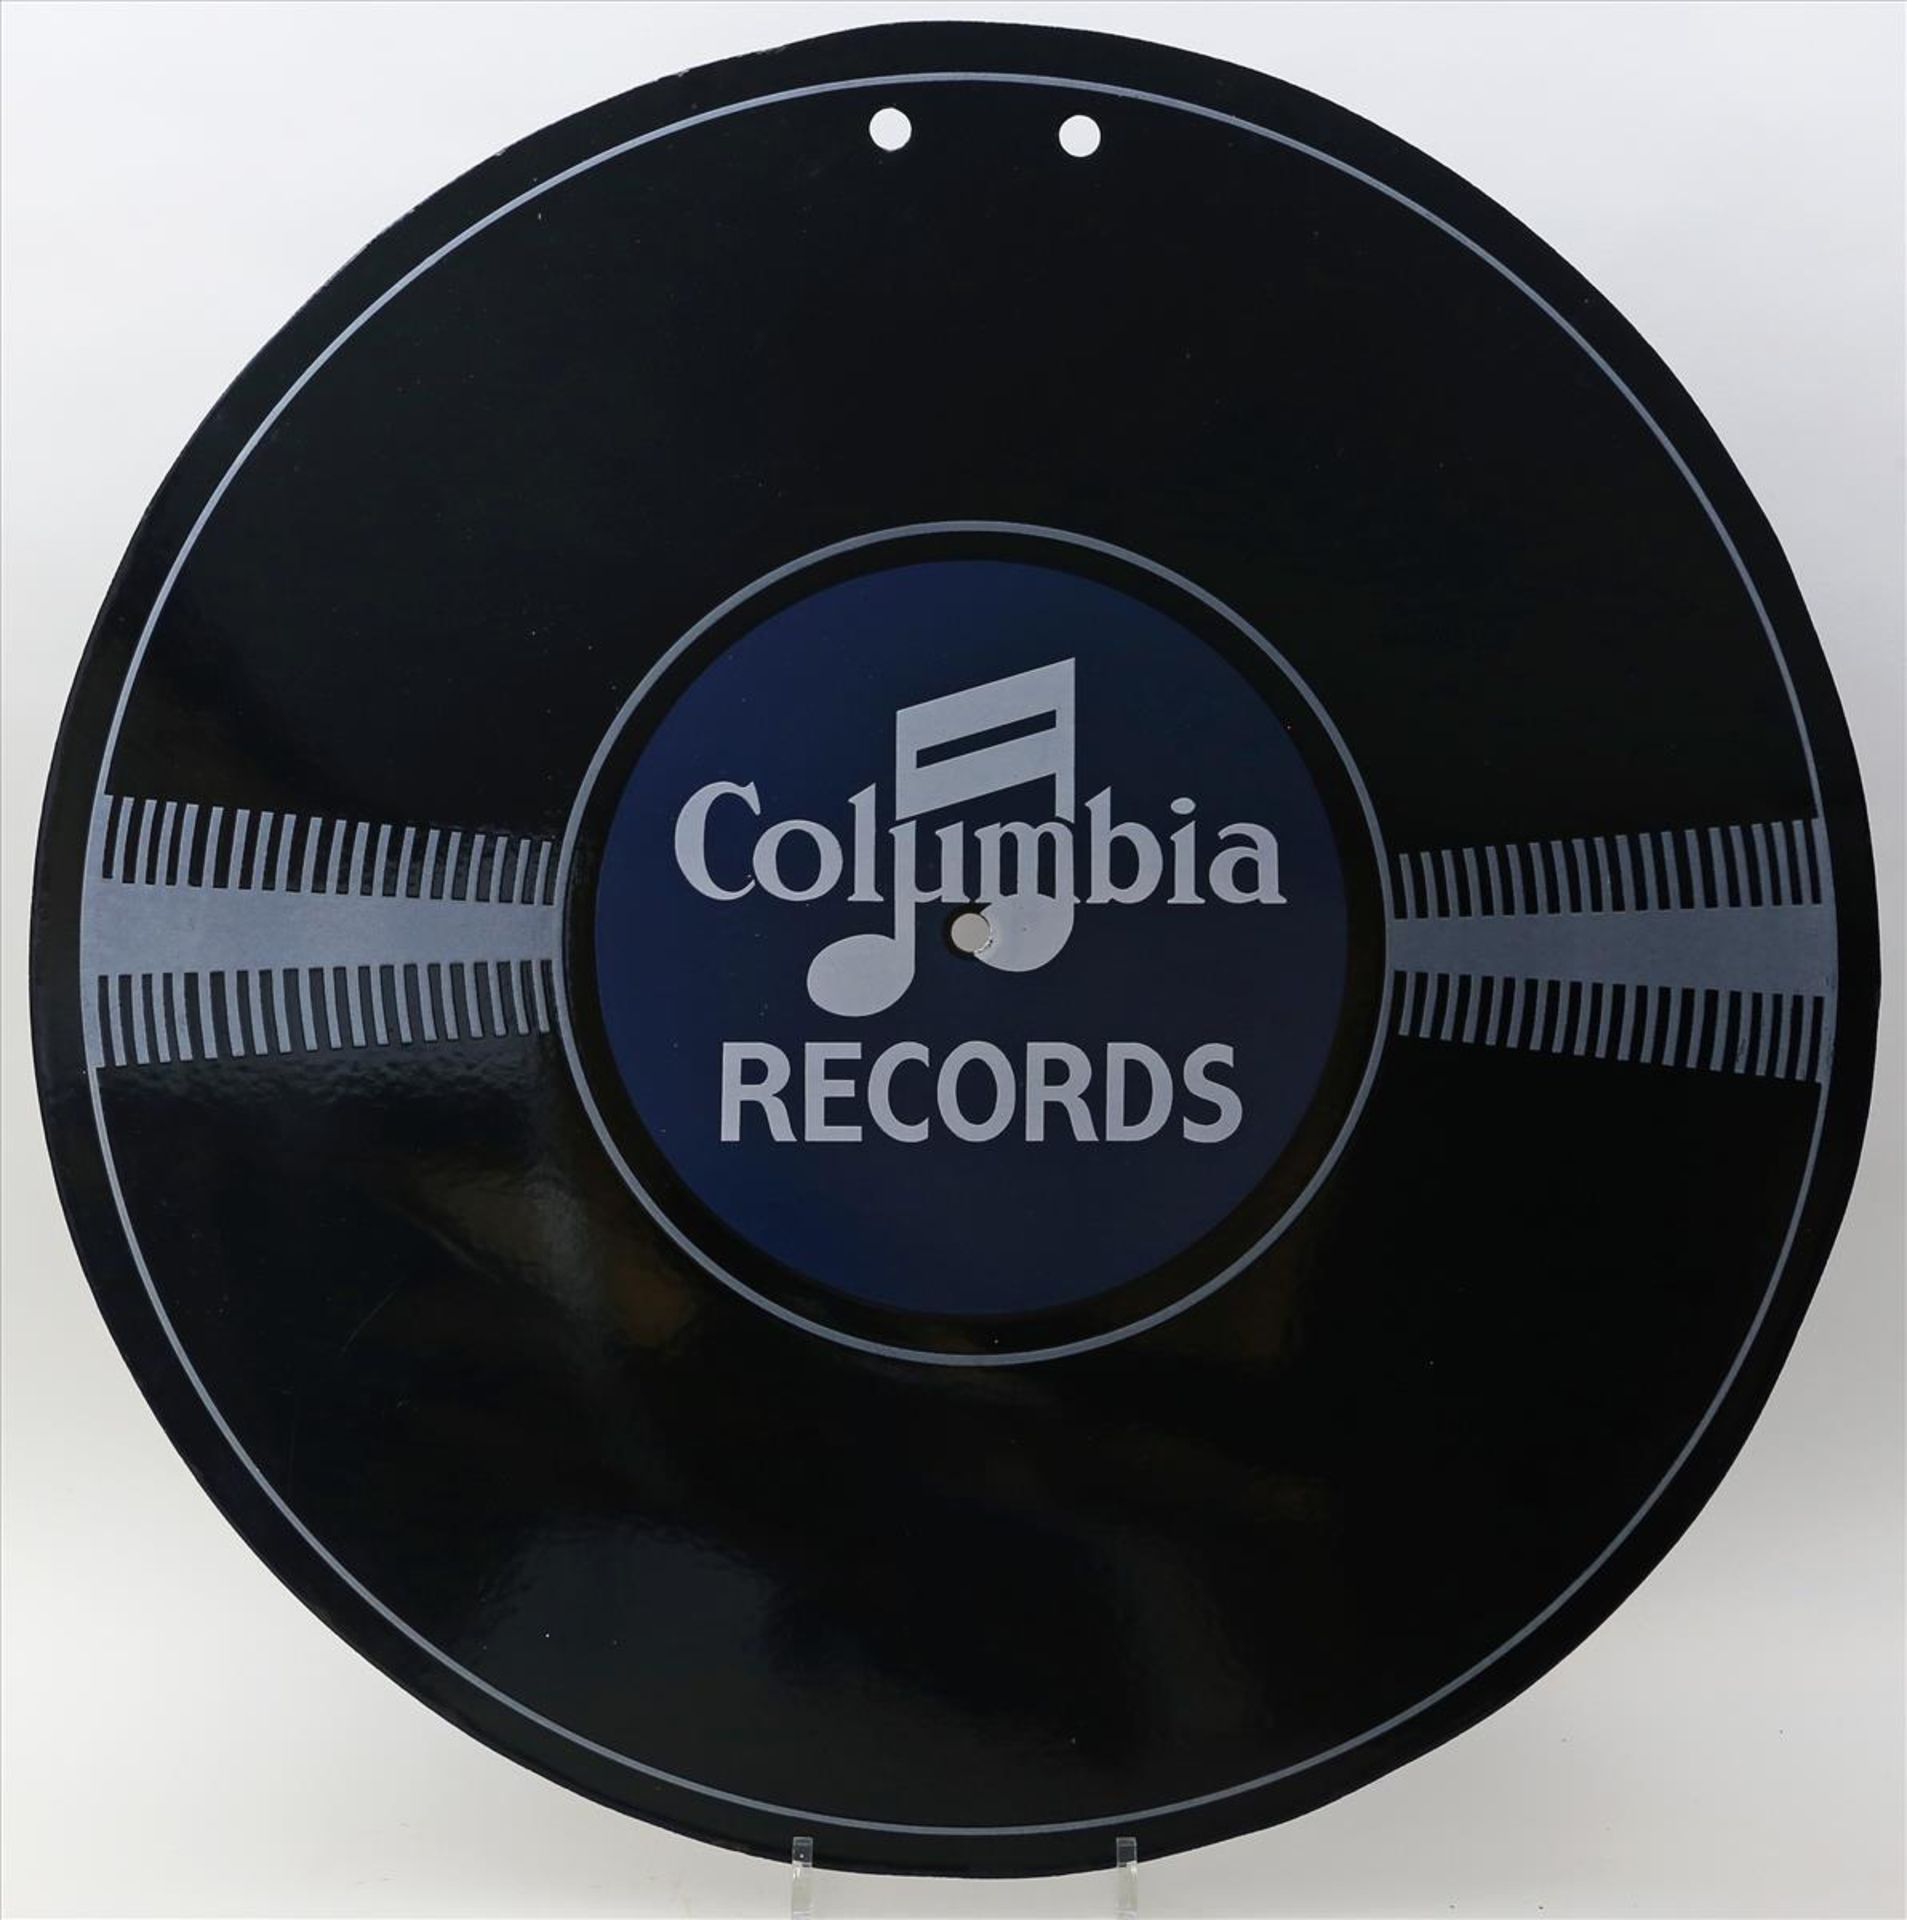 Emailschild "Columbia Records".